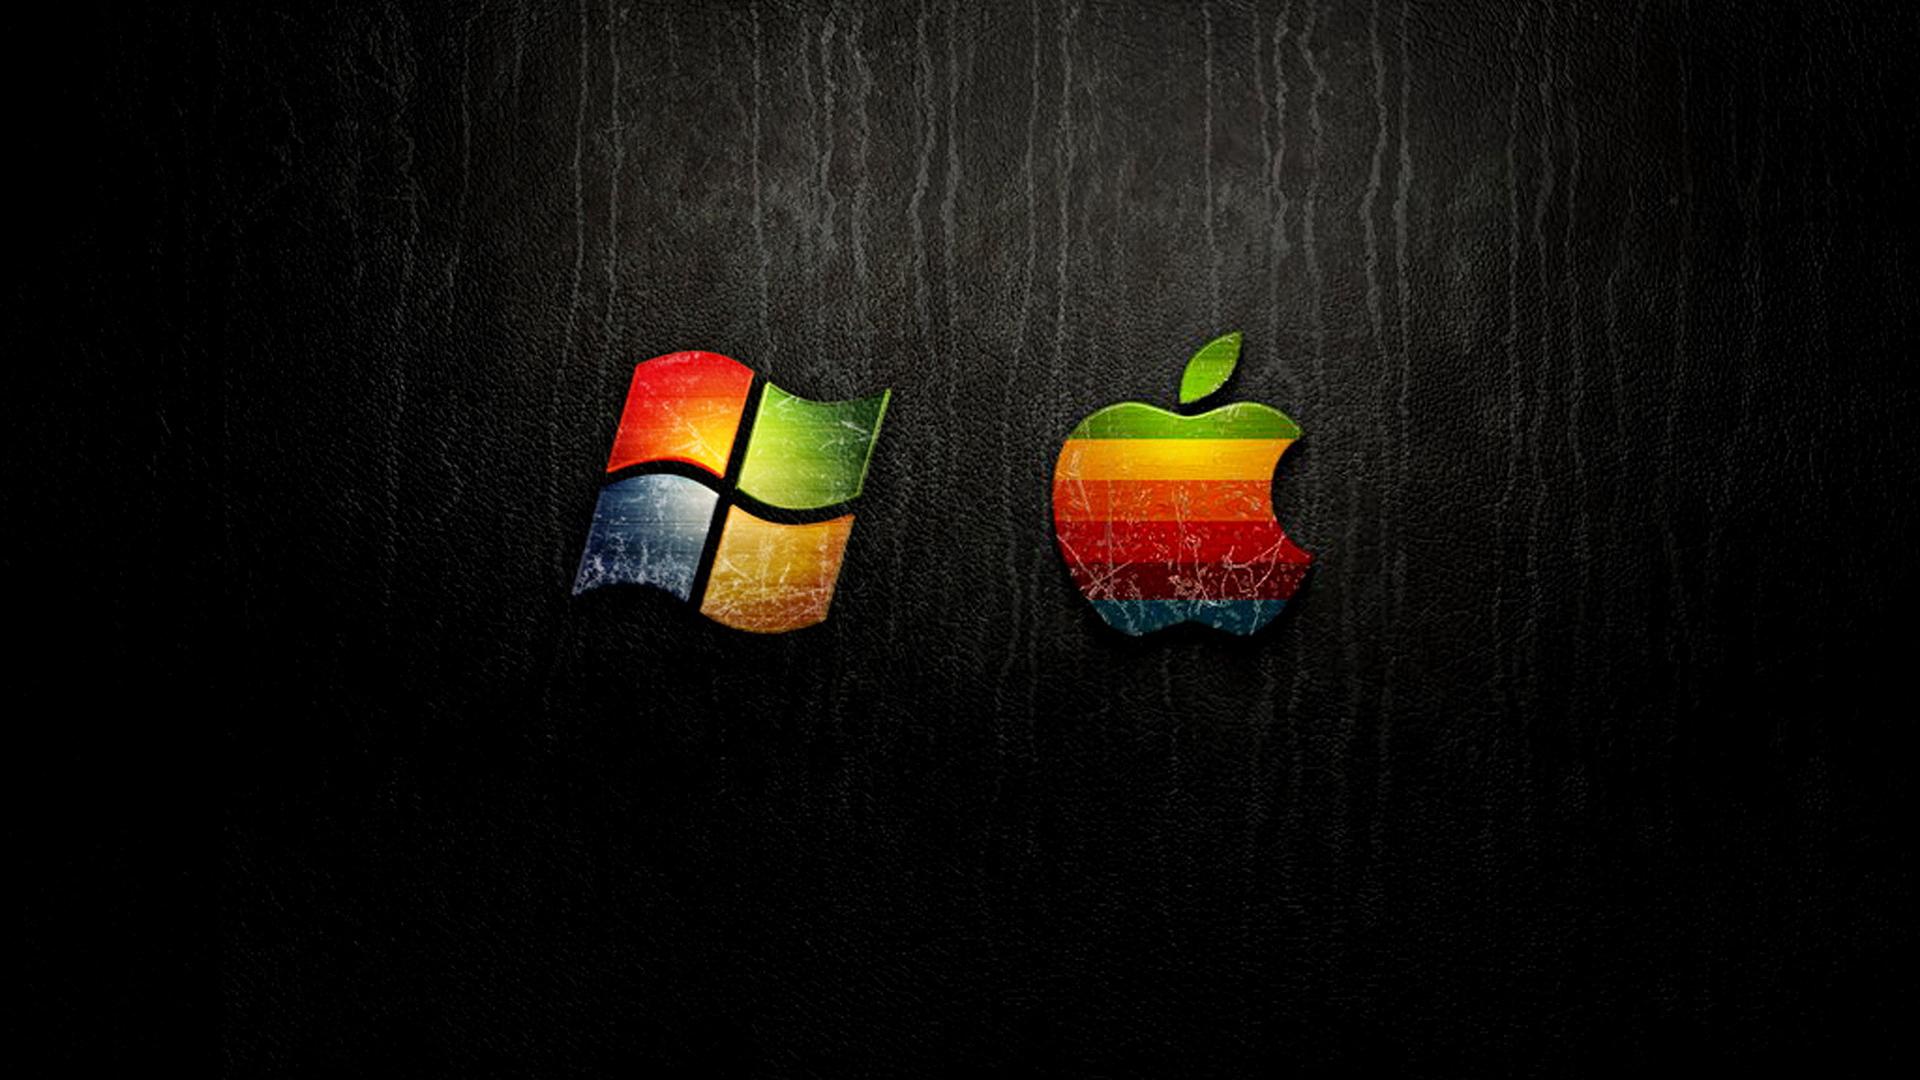 HD Colorful Windows And Apple Wallpaper Background Imagebank Biz